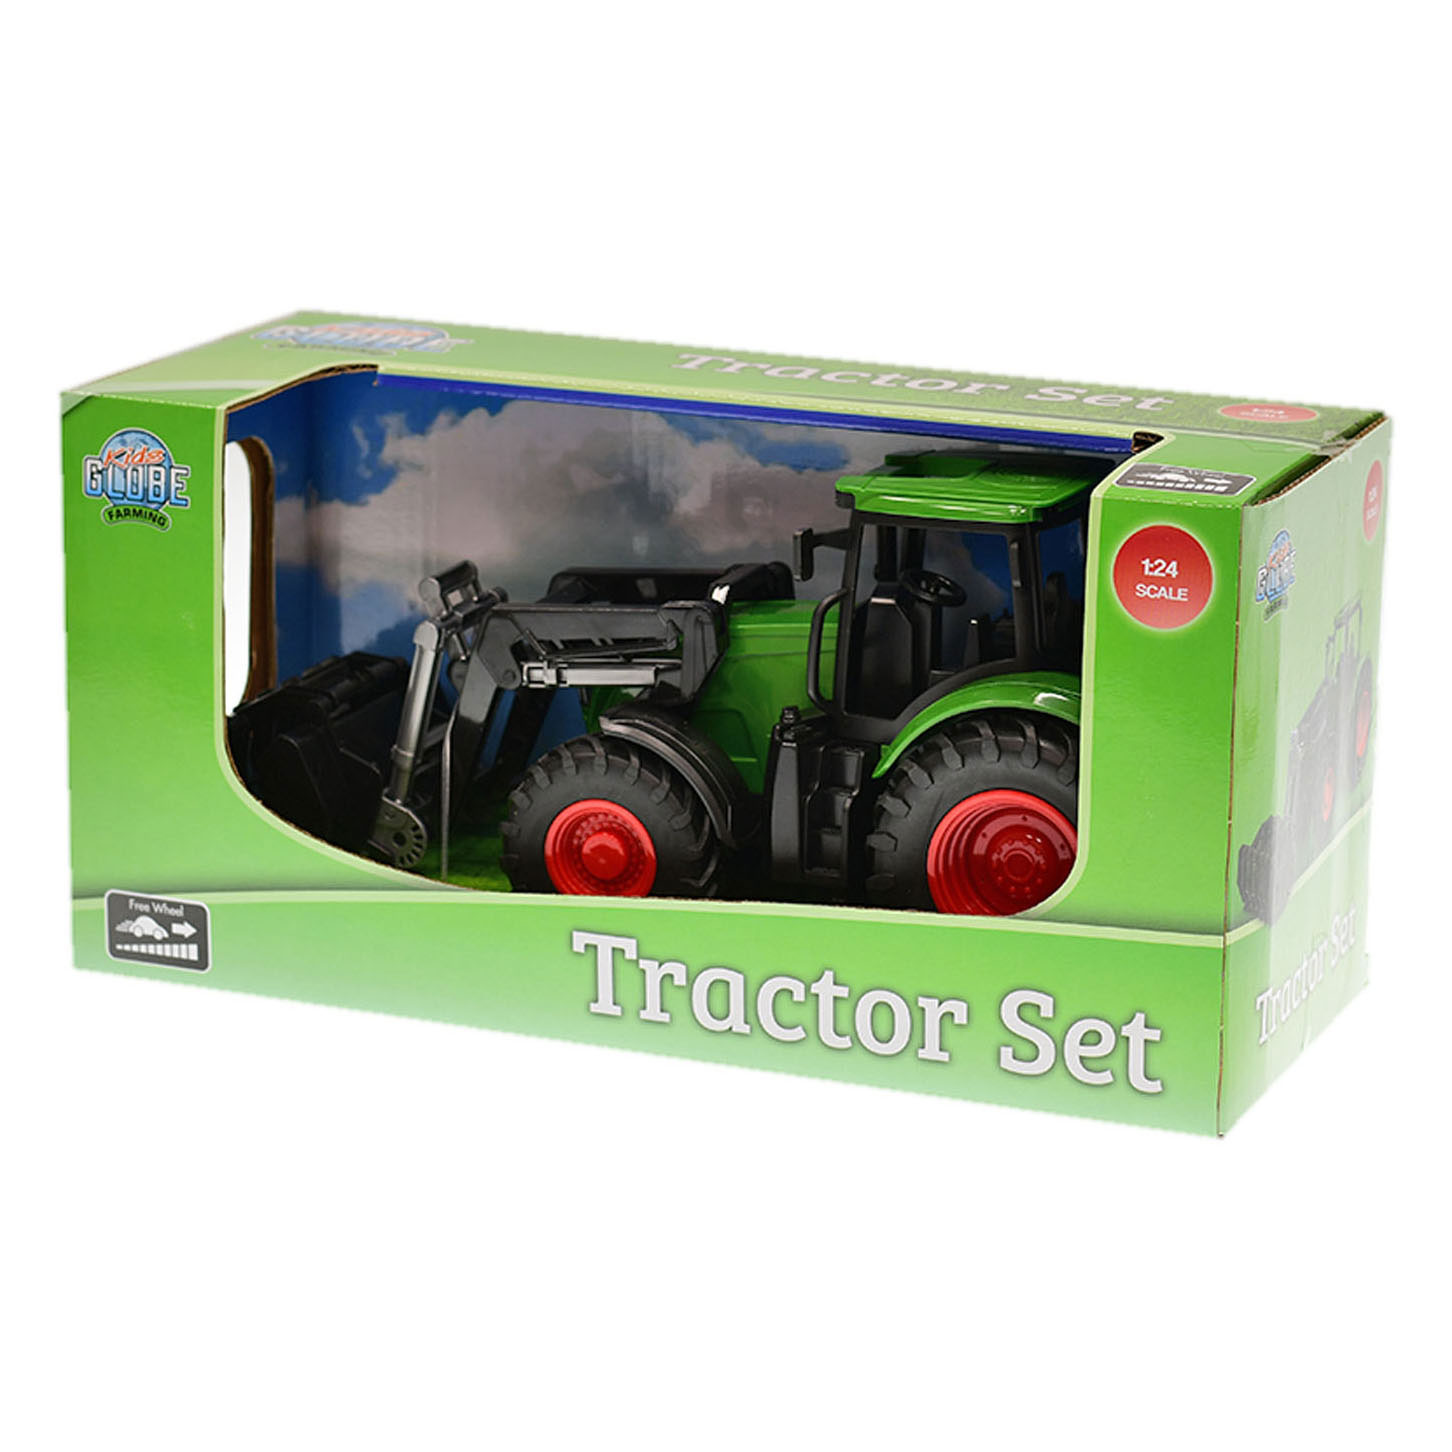 Tracteur Kids Globe avec chargeur frontal - Vert